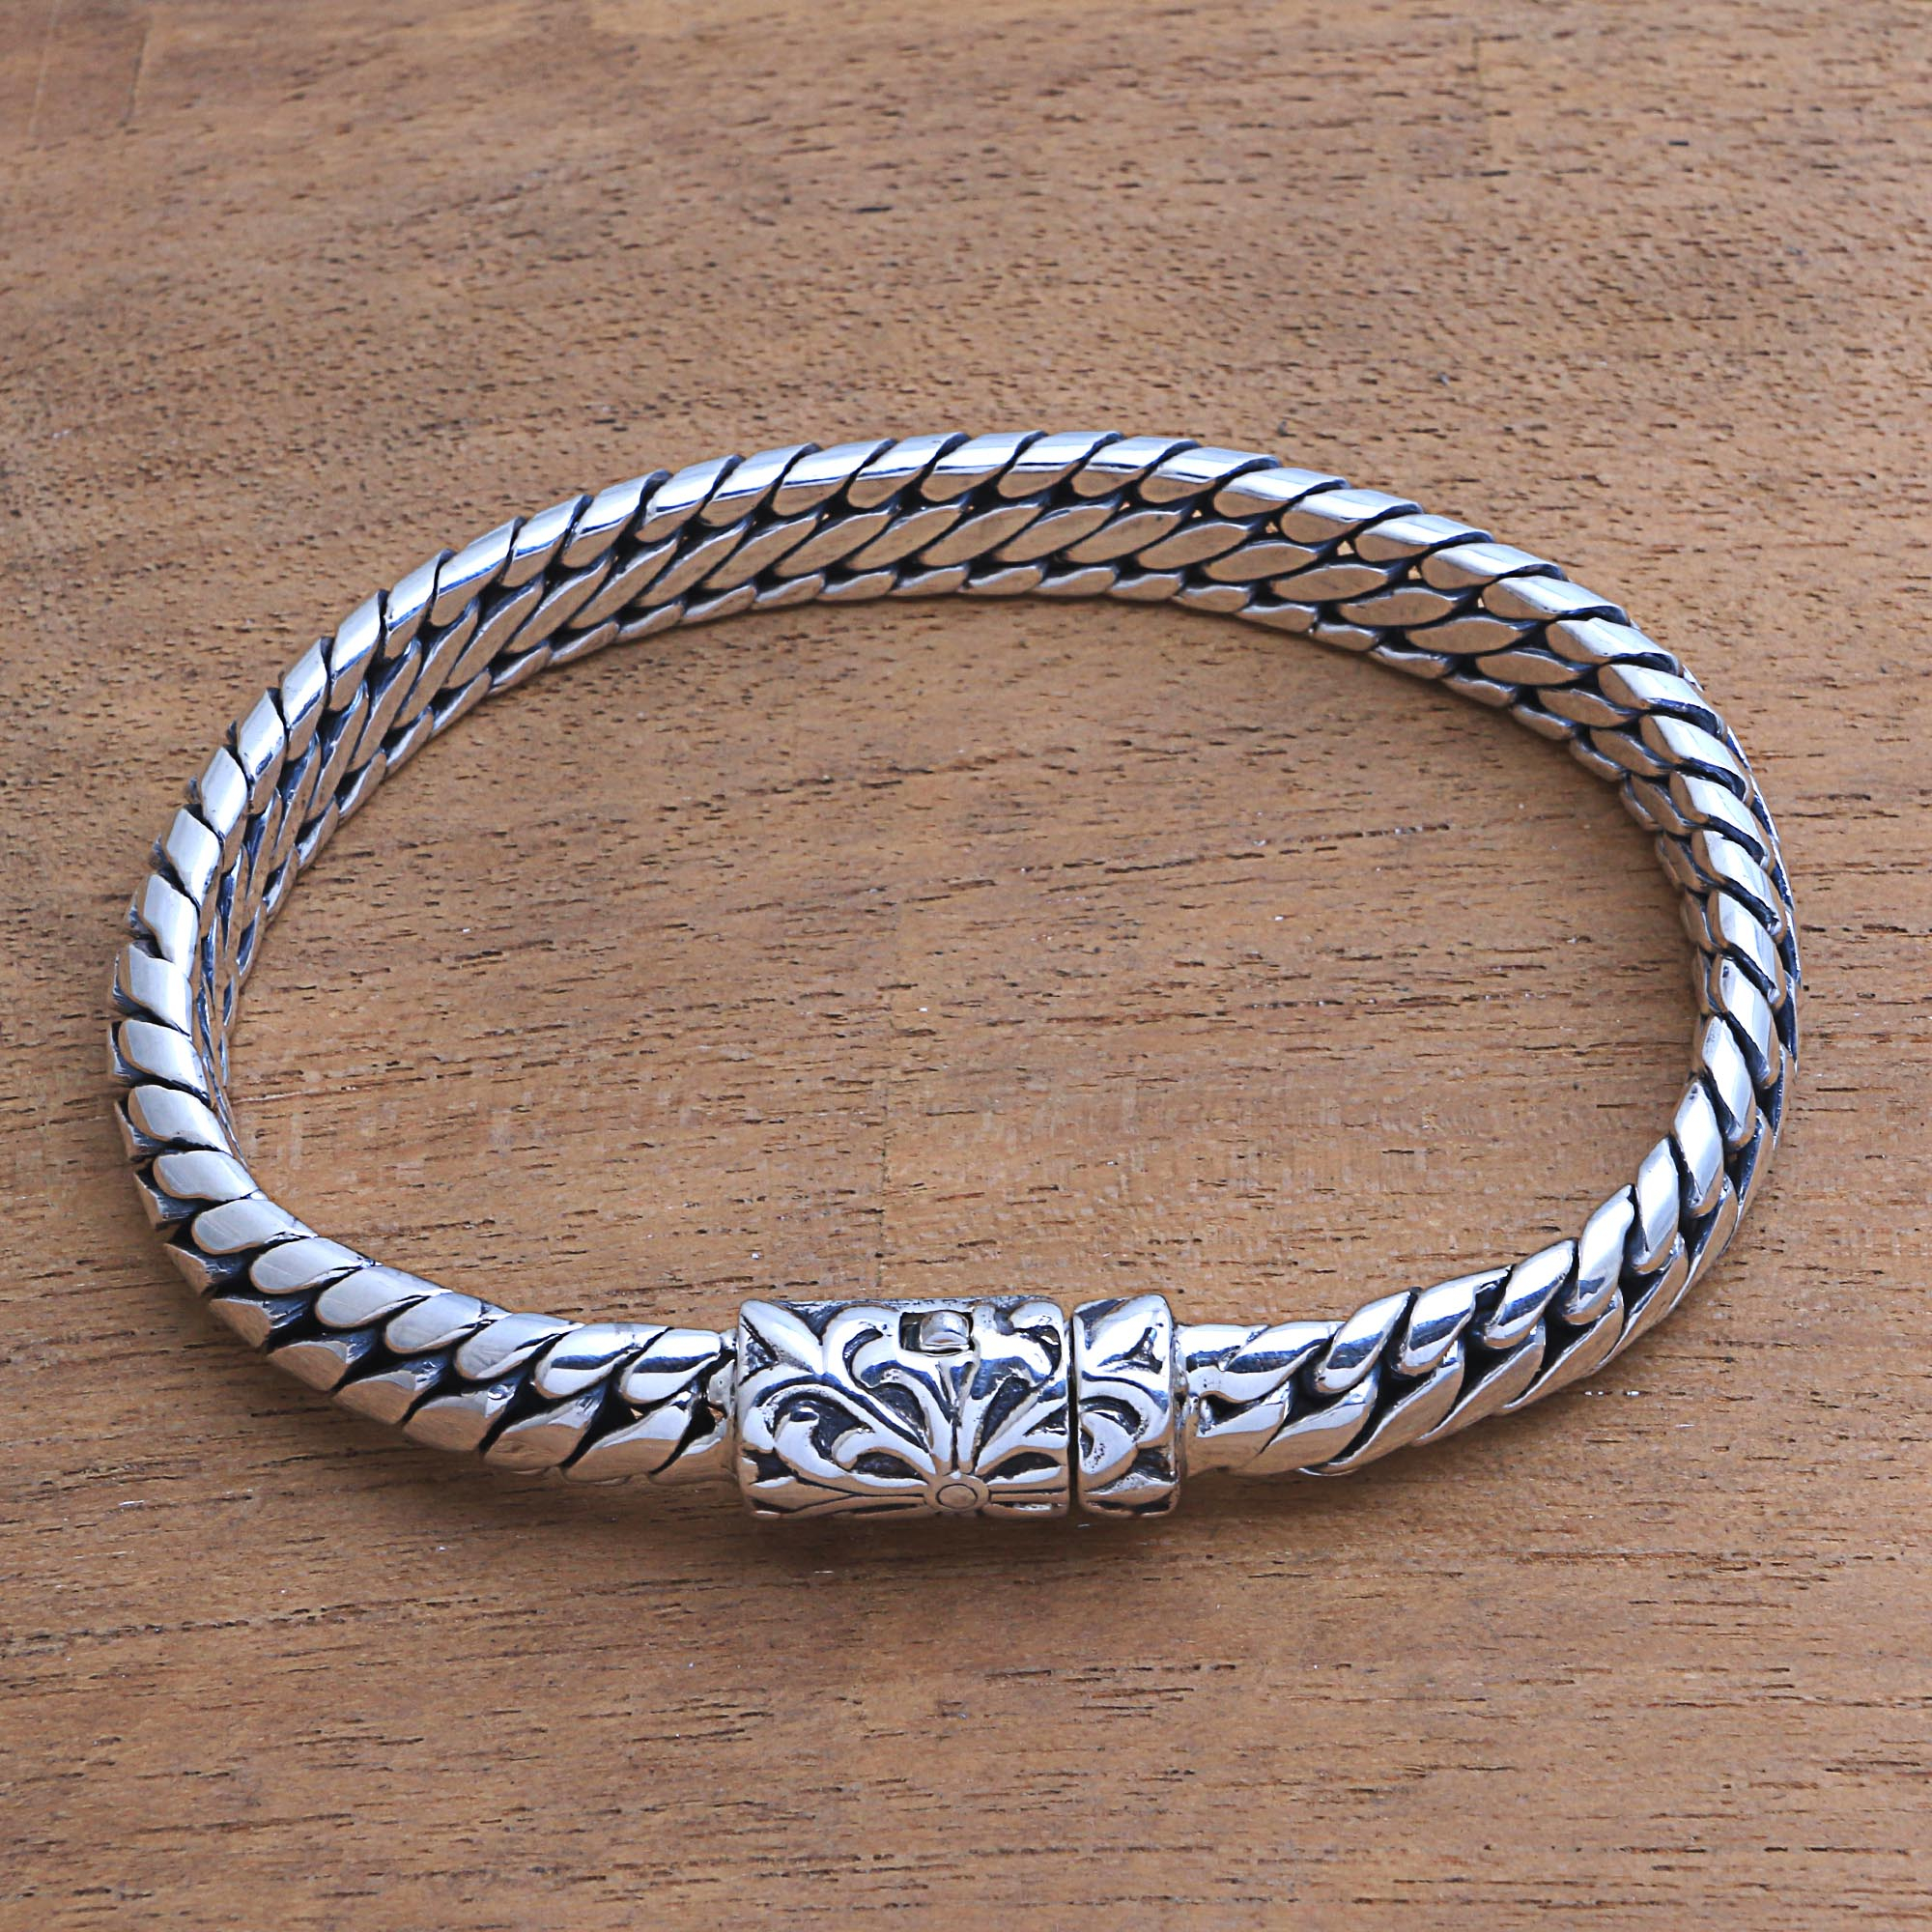 Men's Sterling Silver Snake Chain Bracelet from Bali - Gallant Python ...